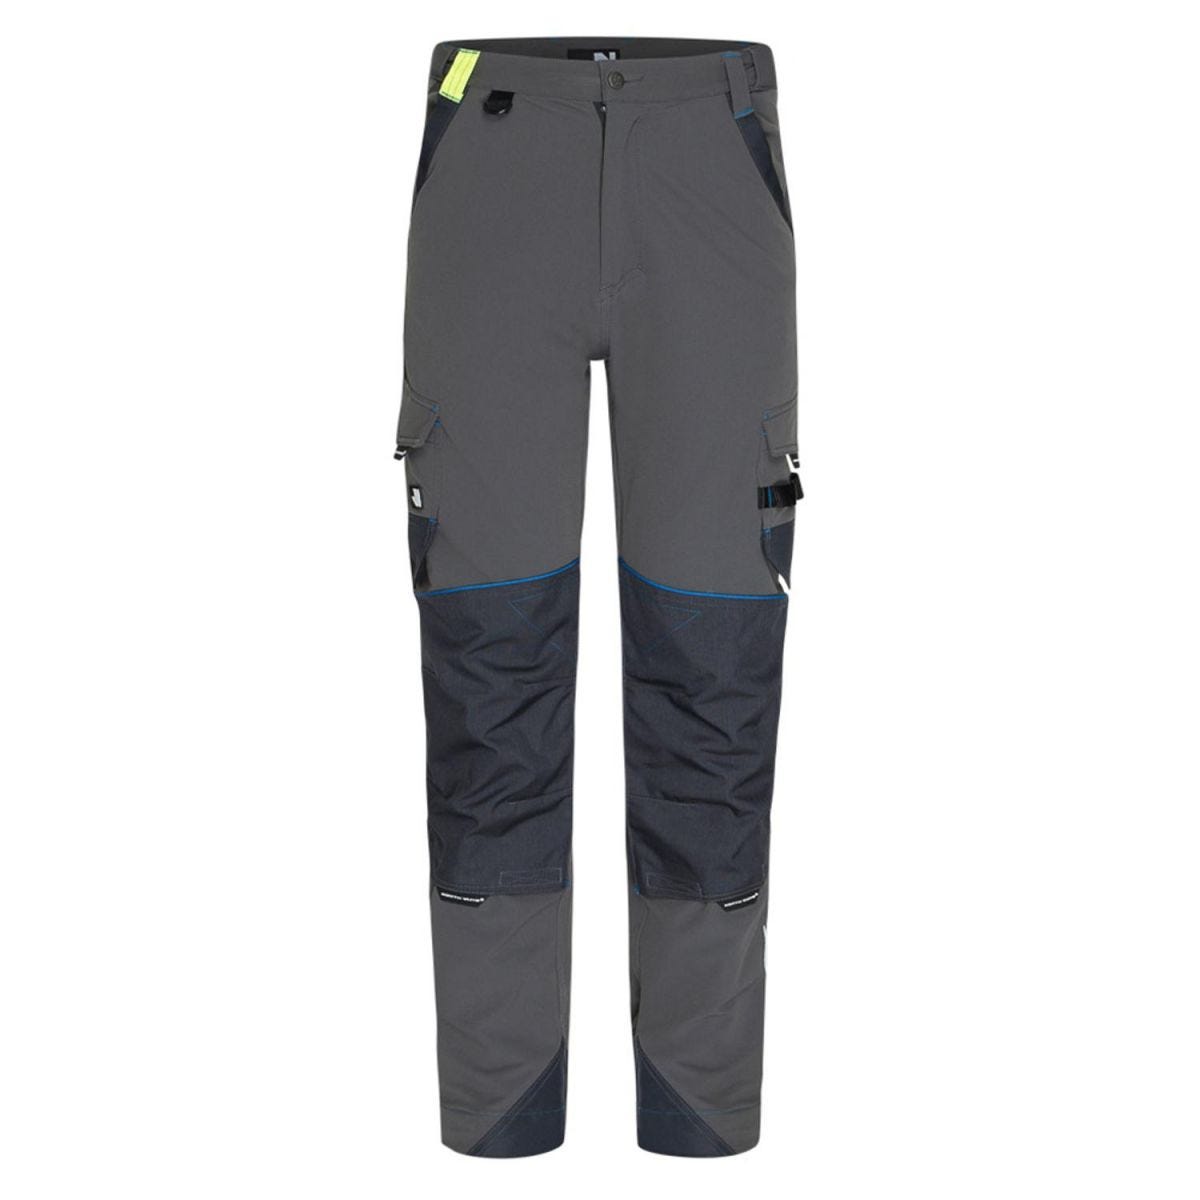 Pantalon de travail SACHA gris/bleu - North Ways - Taille 54 1